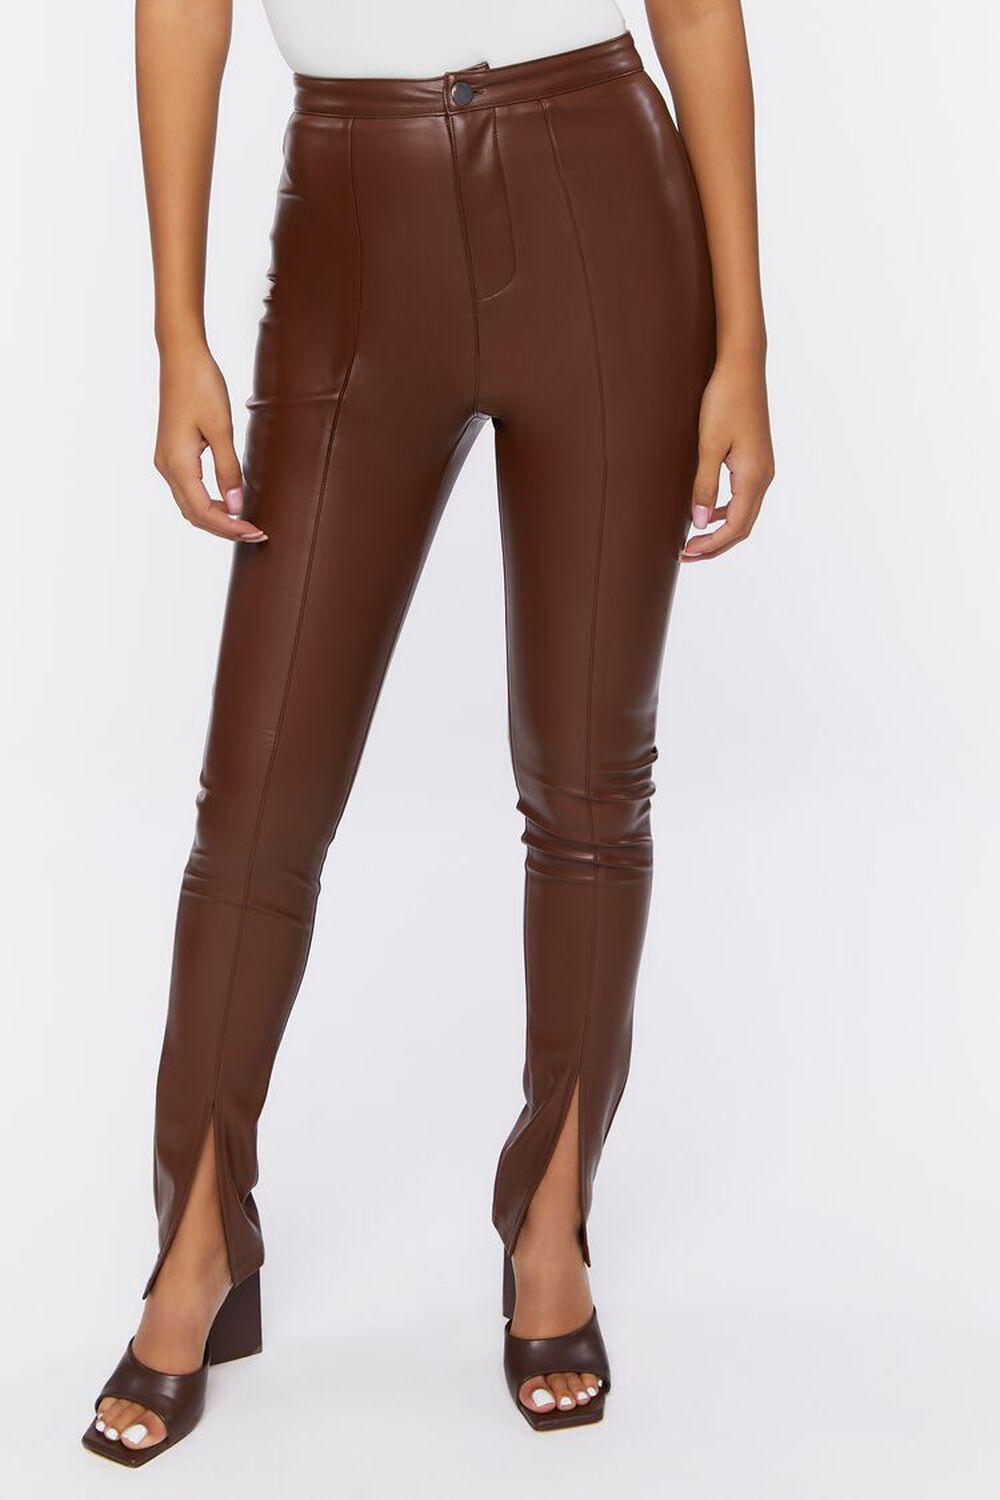 BROWN Faux Leather Split-Hem Pants, image 2